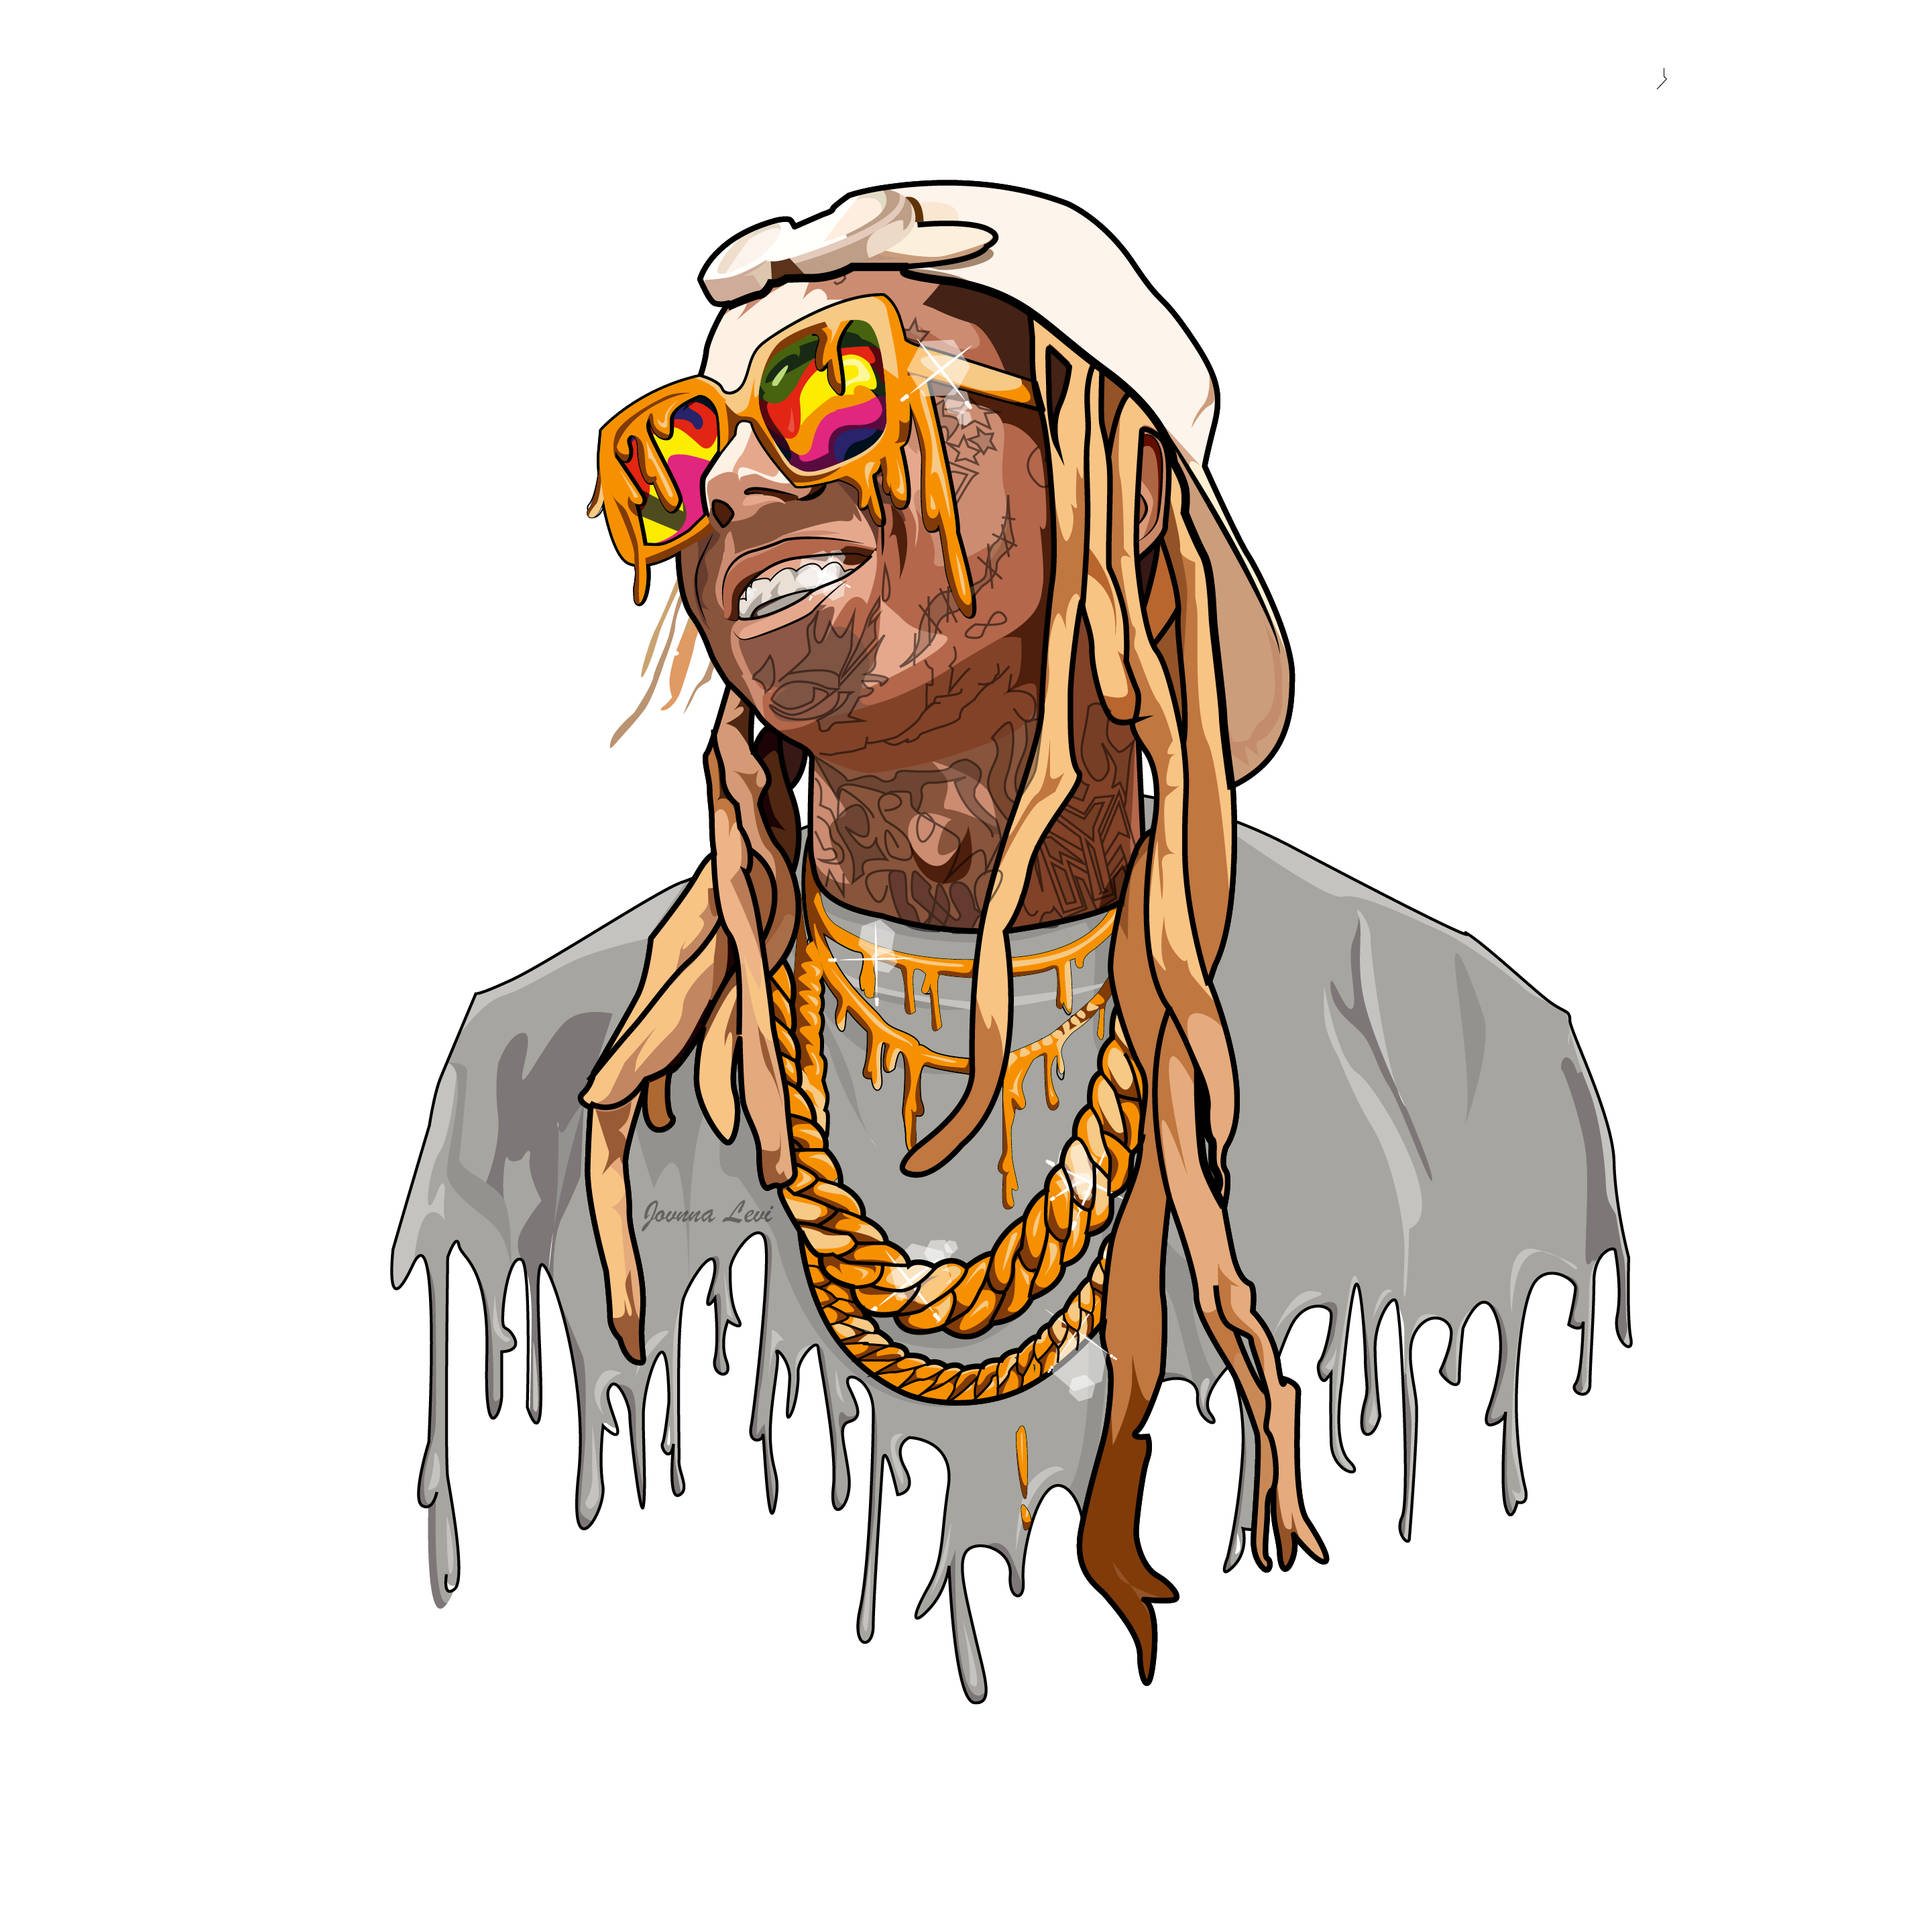 Lil Wayne Digital Art Background